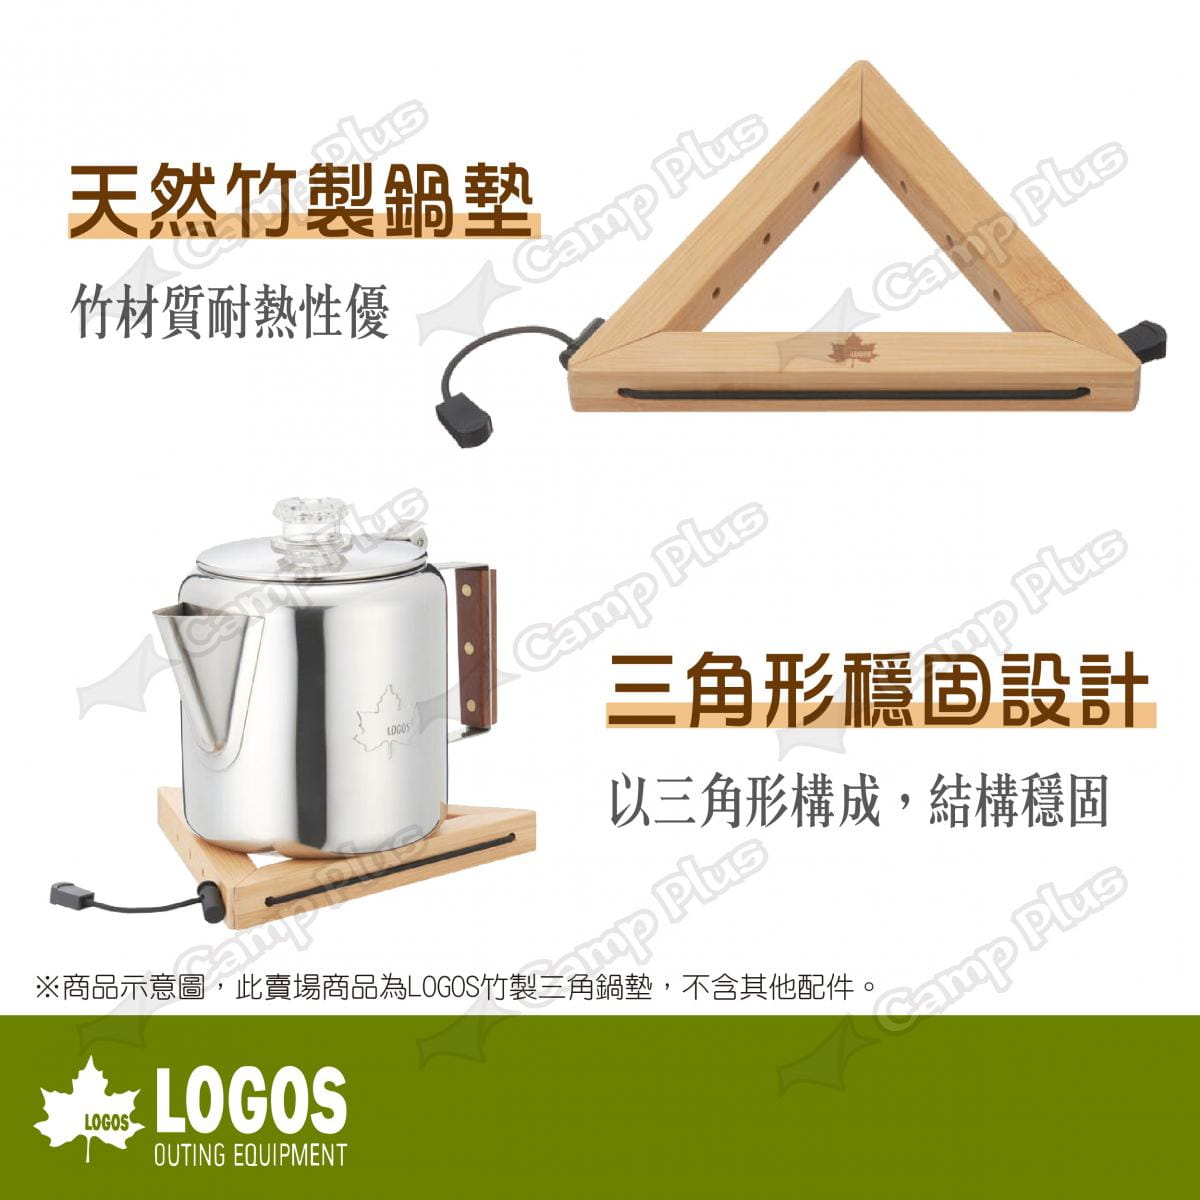 【LOGOS】竹製三角鍋墊 LG81280006 (悠遊戶外) 2